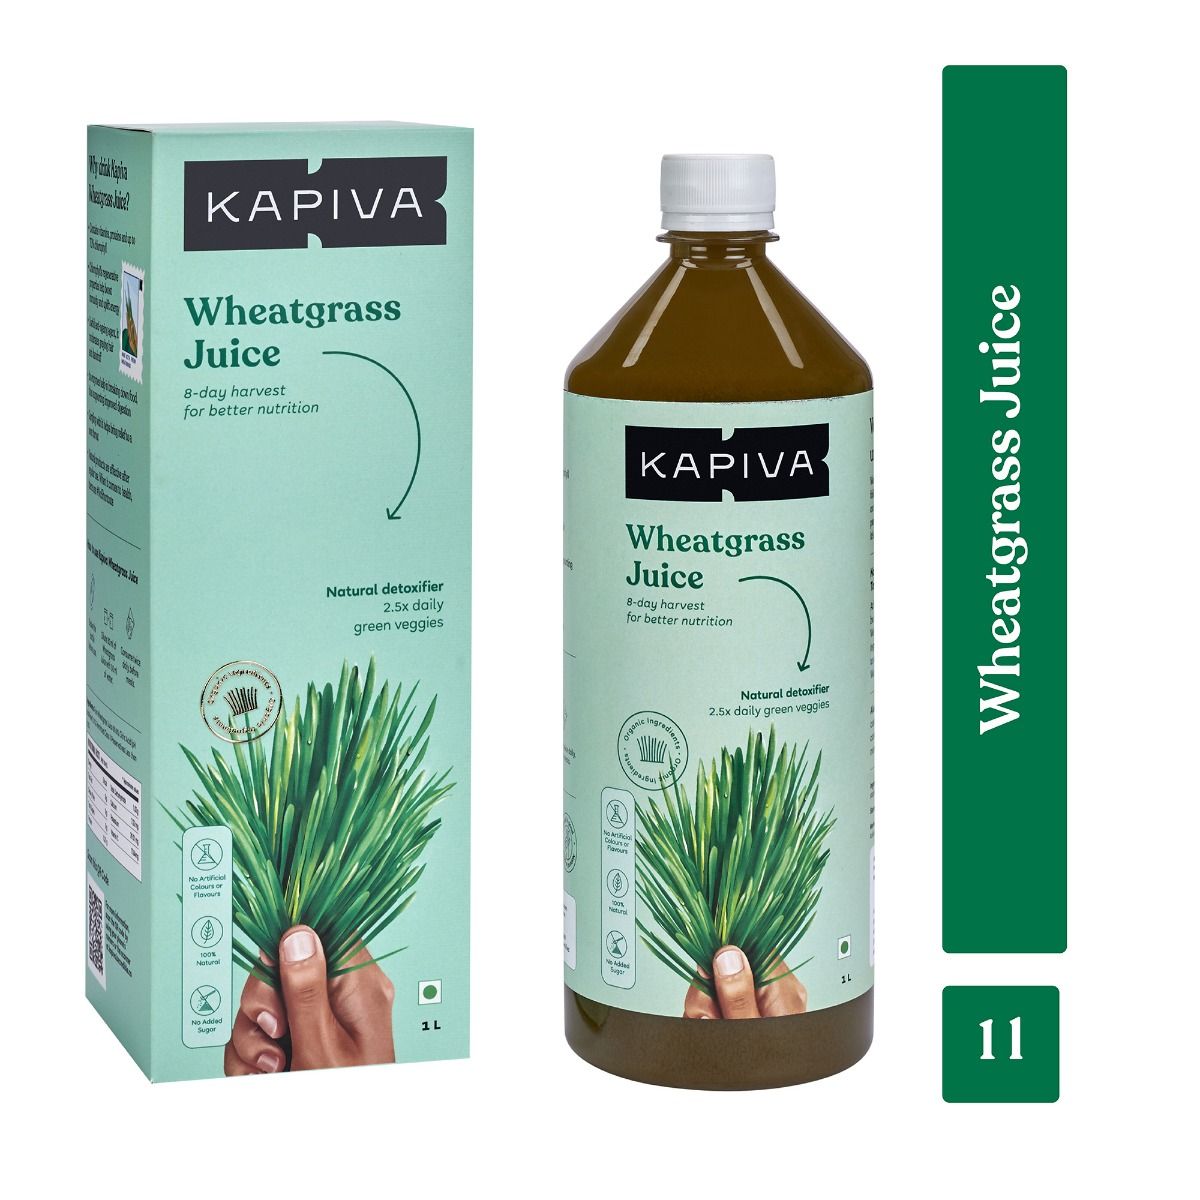 Kapiva Wheatgrass Juice, 1 L, Pack of 1 